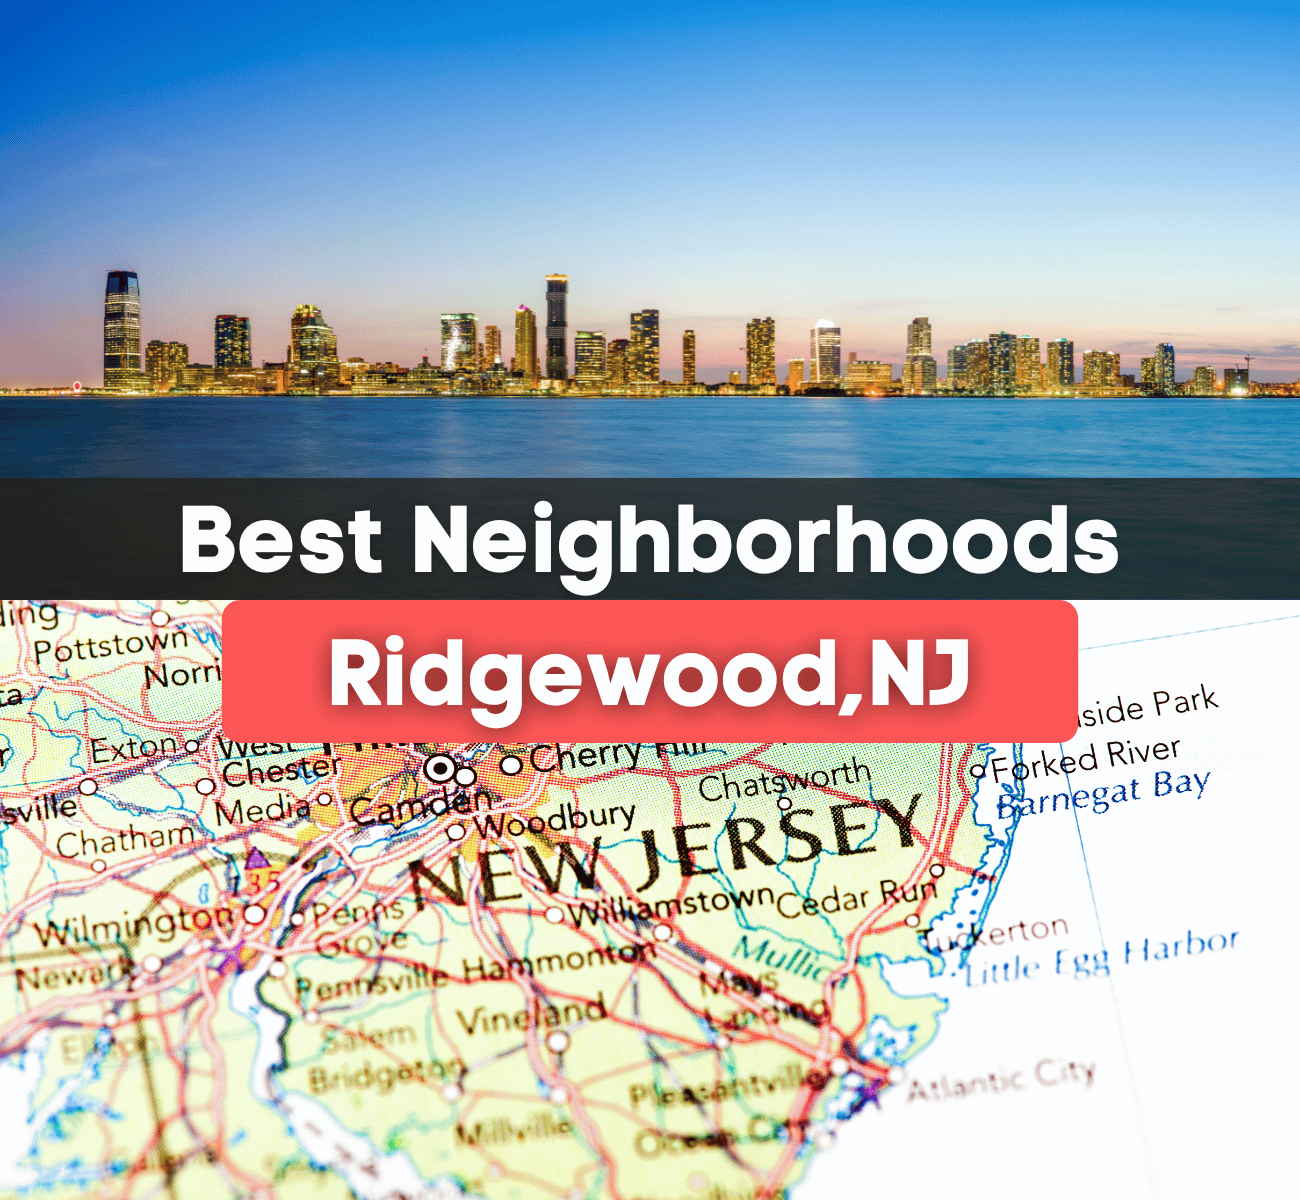 Best Neighborhoods in Ridgewood, NJ - skyline and location on a map